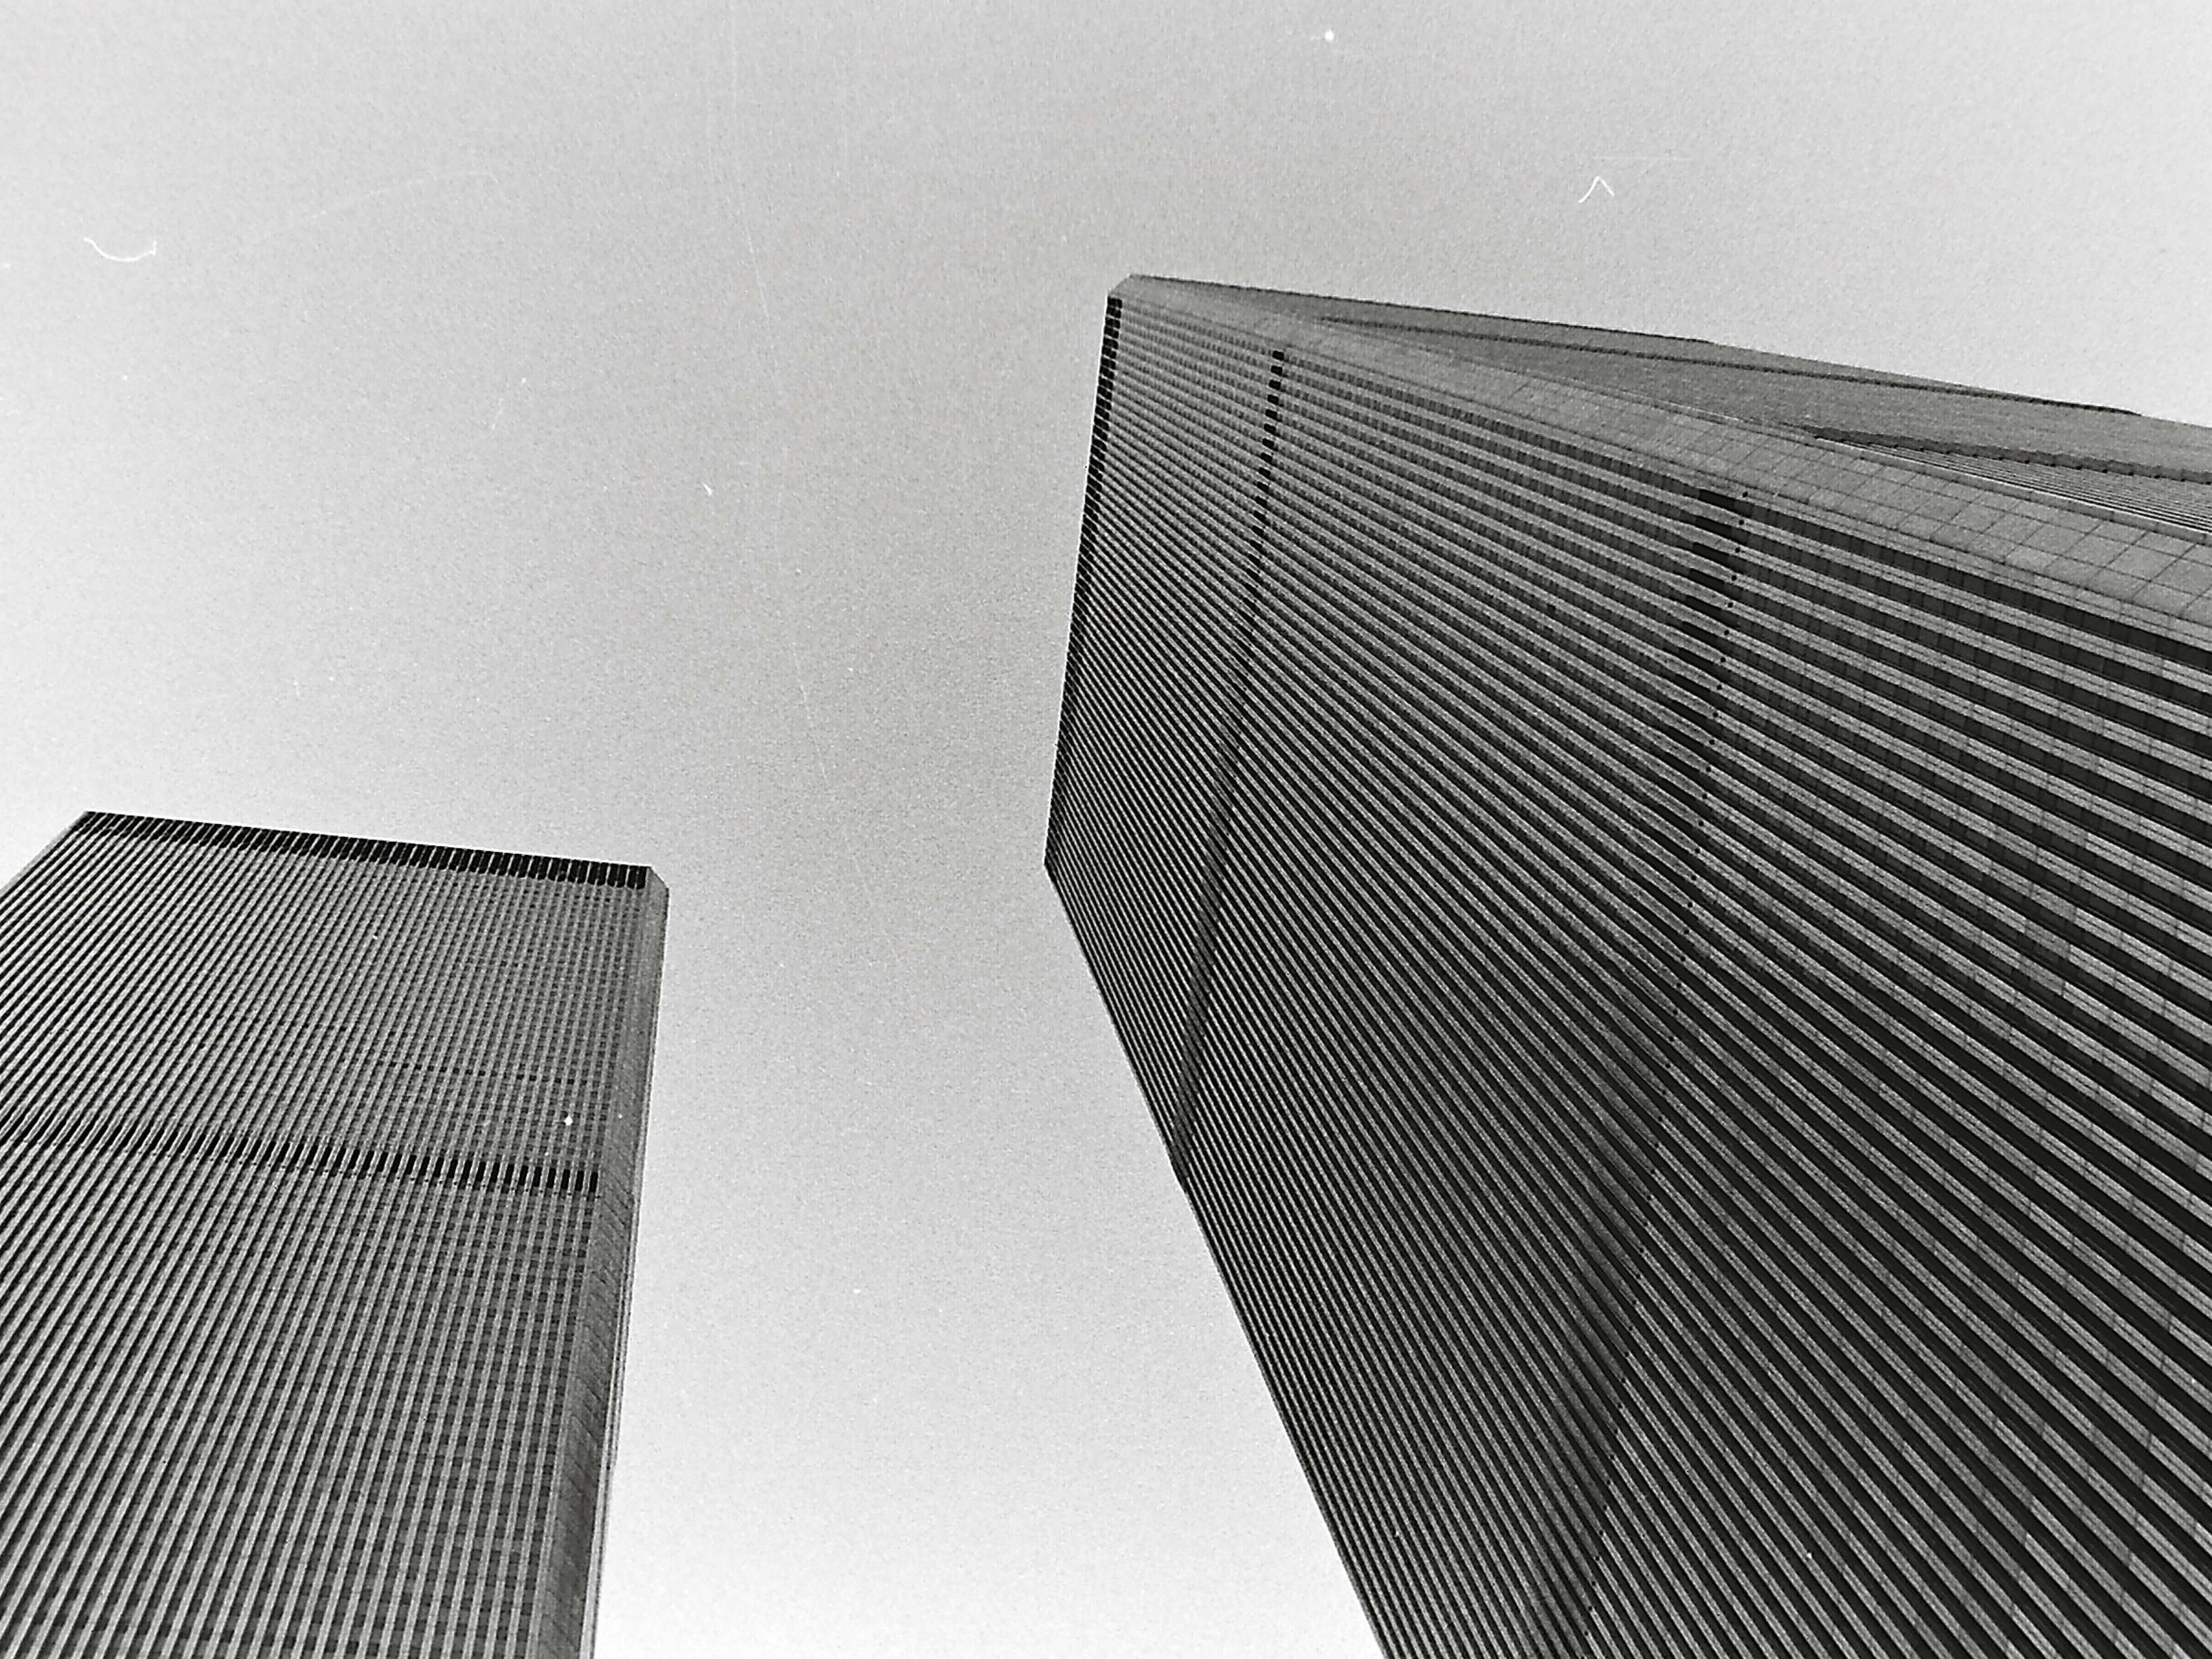 New York, 1988